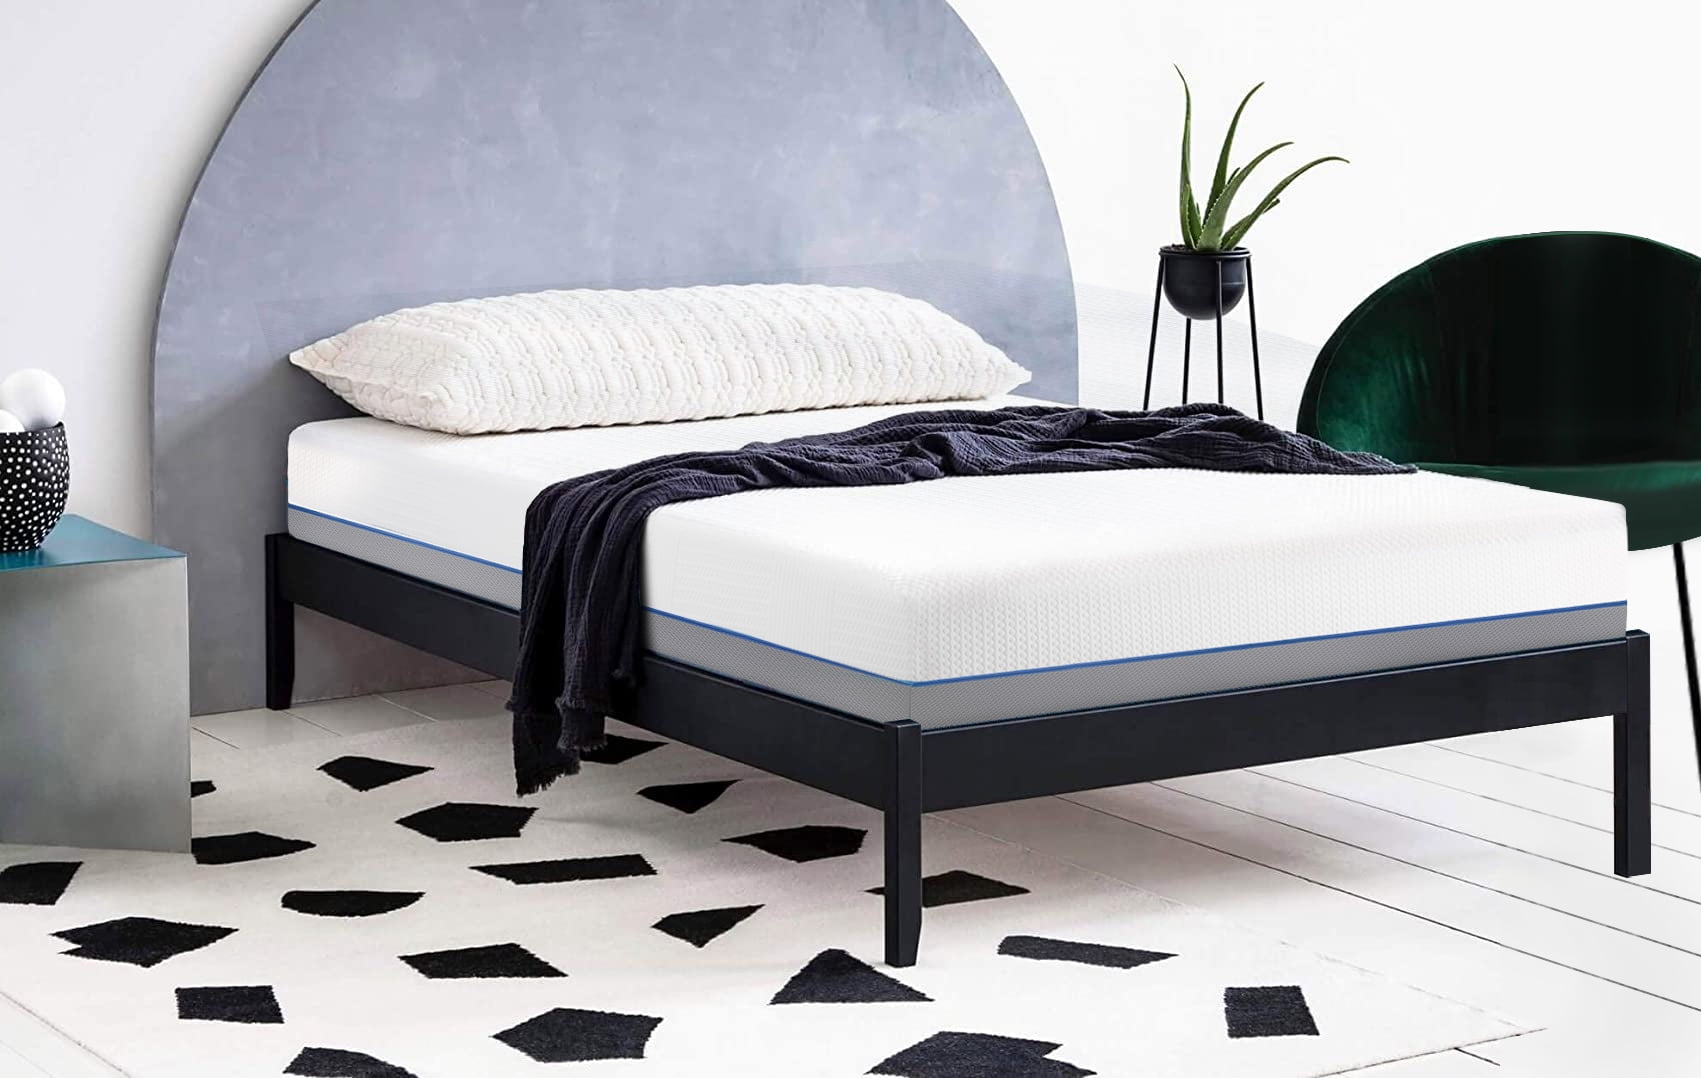 33 inch mattress daybeds